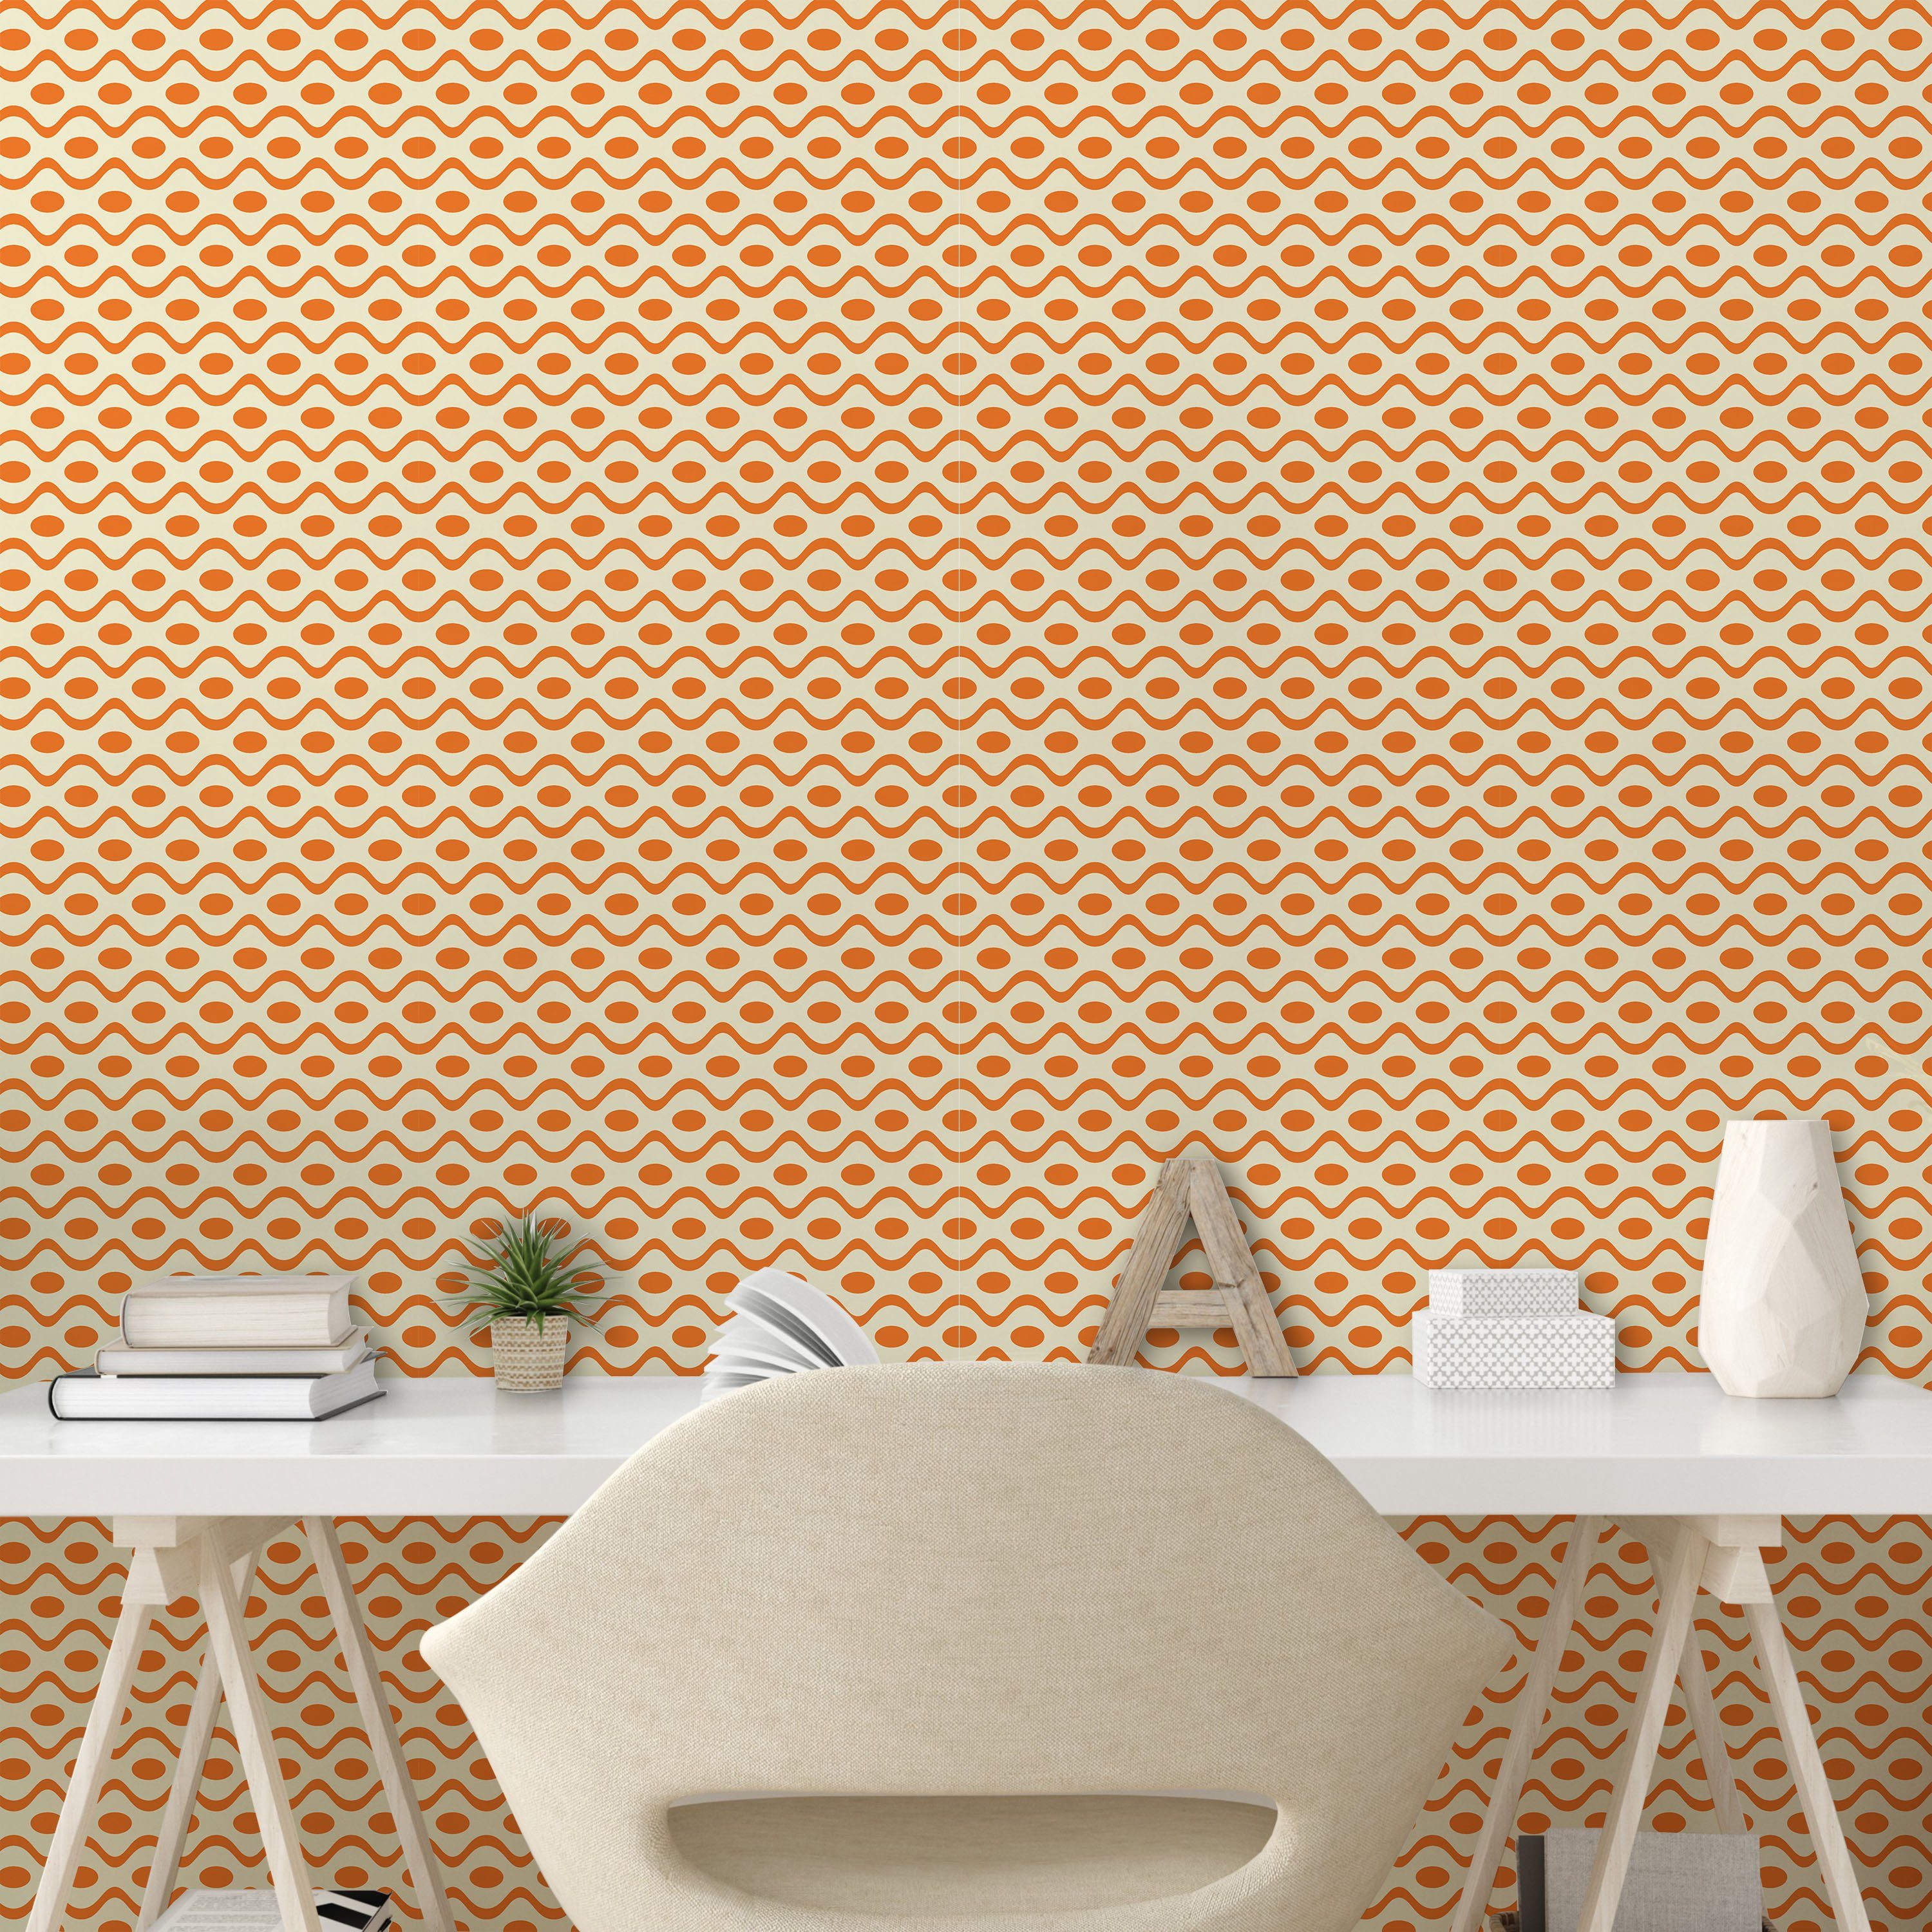 Abakuhaus Vinyltapete selbstklebendes Wohnzimmer Elliptic Muster Küchenakzent, Jahrgang Wellenförmige